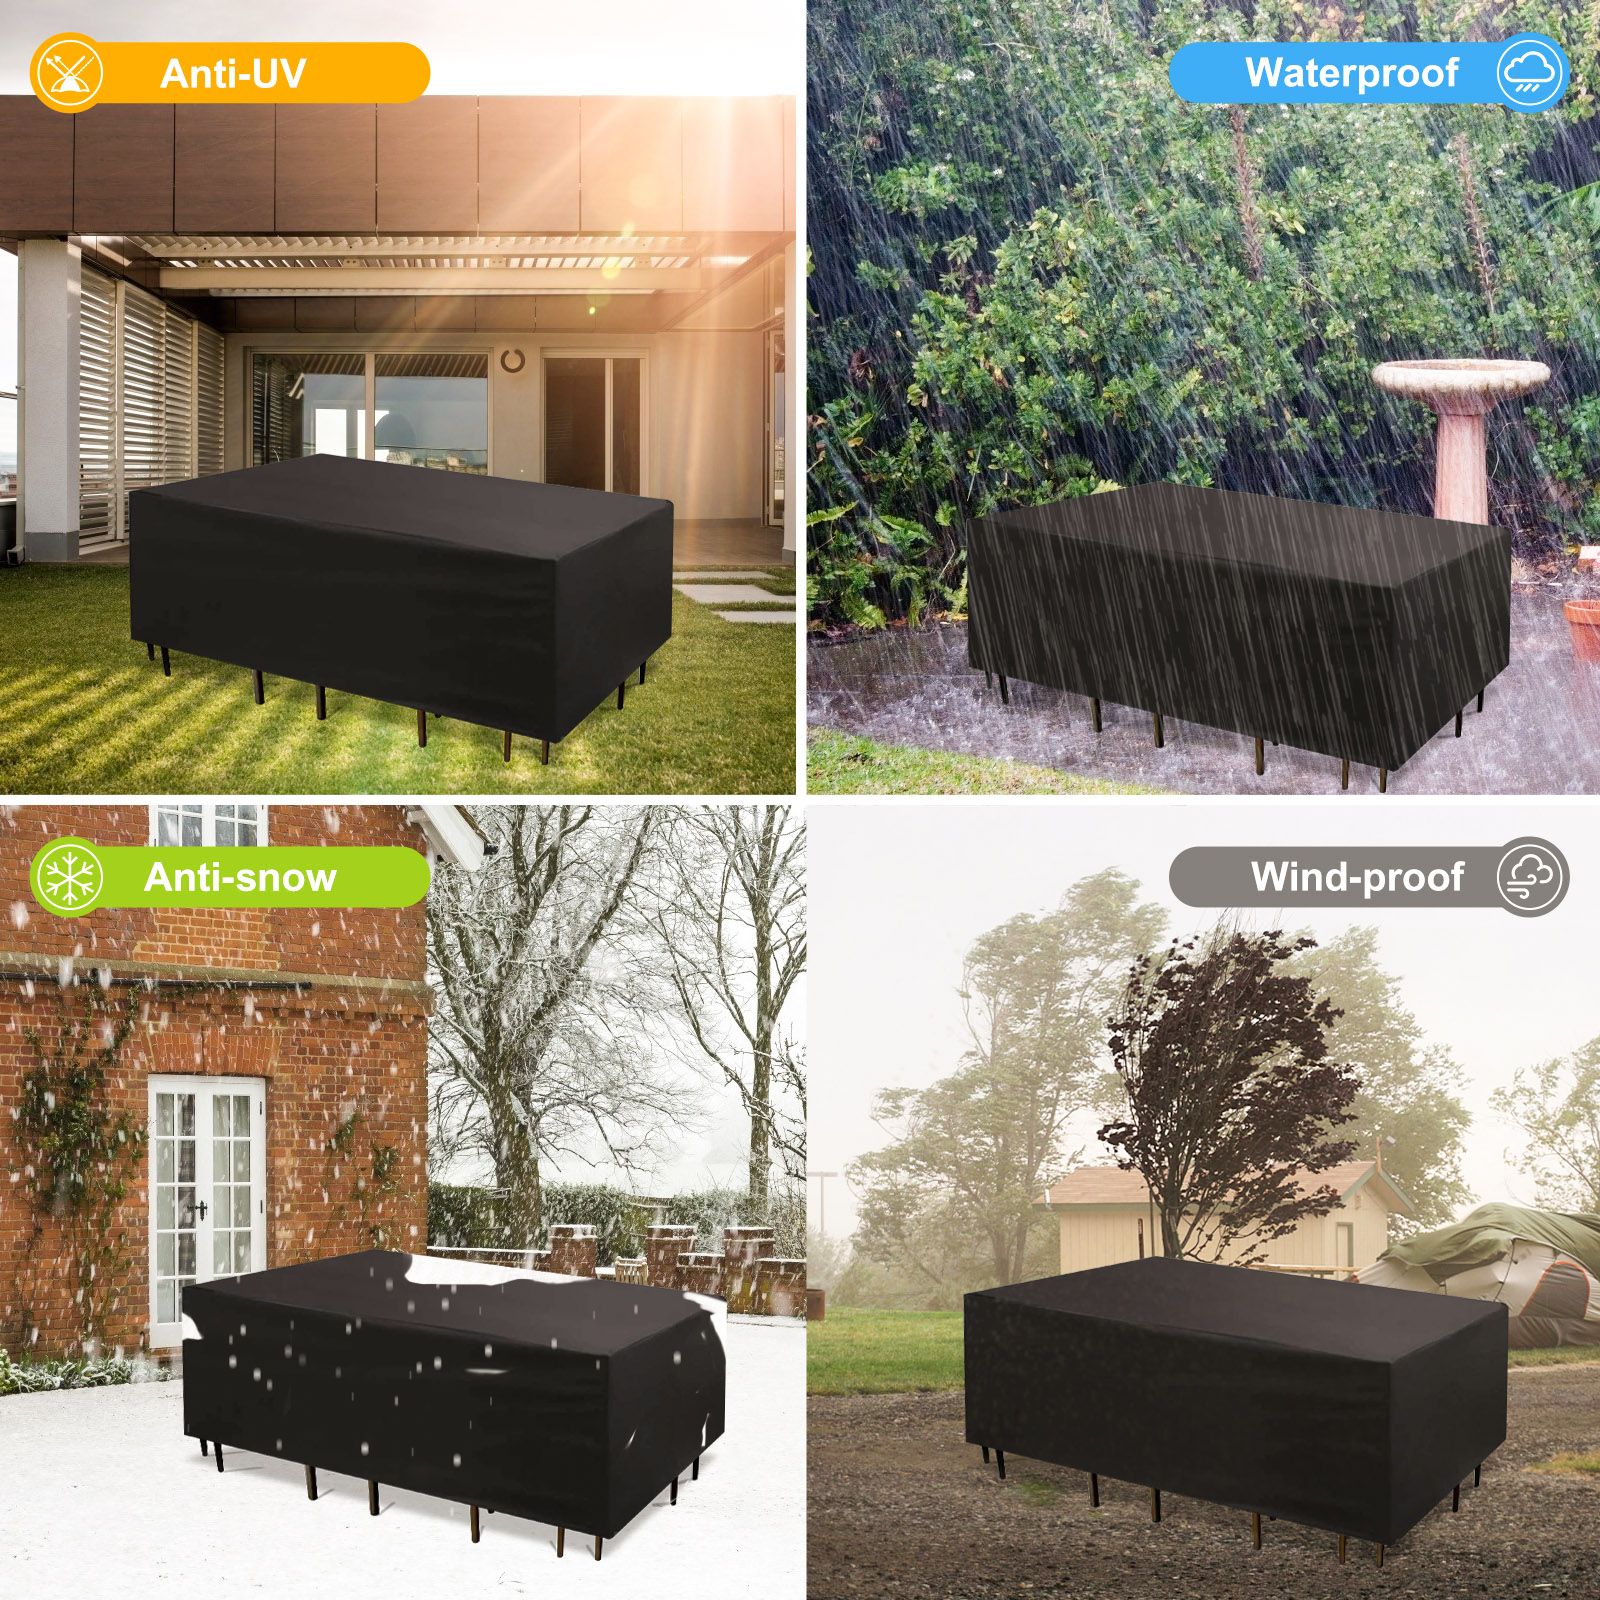 NASUM-420D-Oxford-Cloth-Furniture-Cover-Waterproof-Anti-UV-Rain-Protection-Patio-Cover-1895572-6